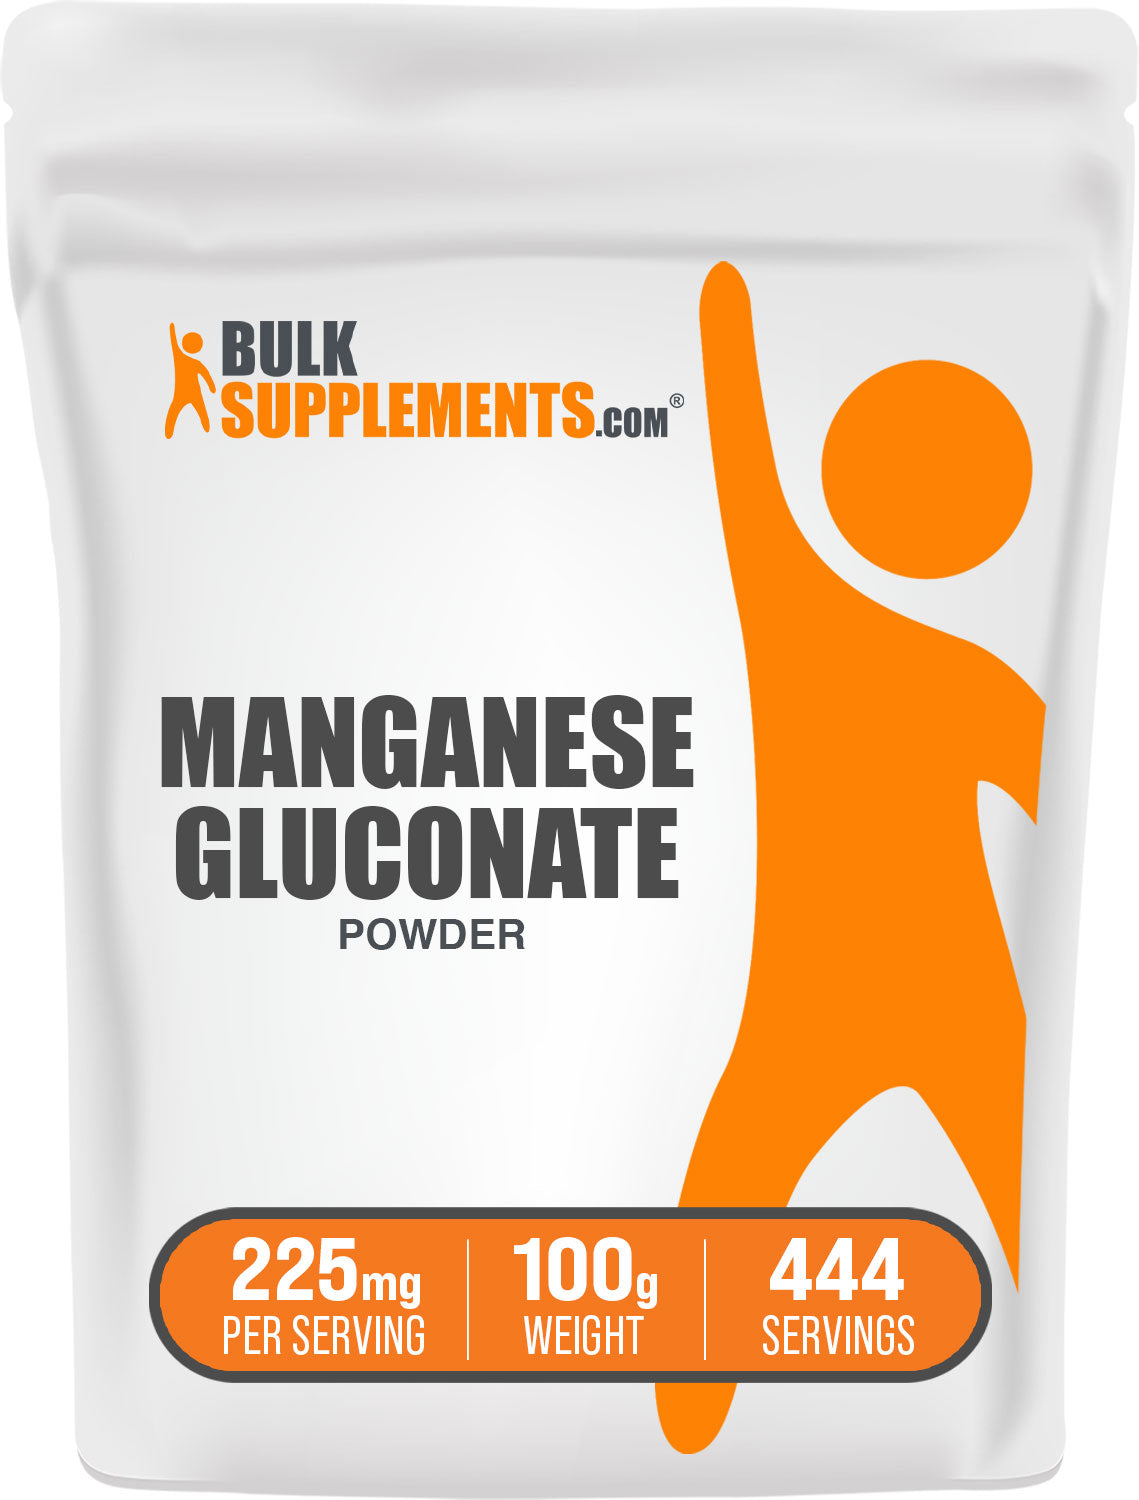 BulkSupplements.com Manganese Gluconate Powder 100g Bag